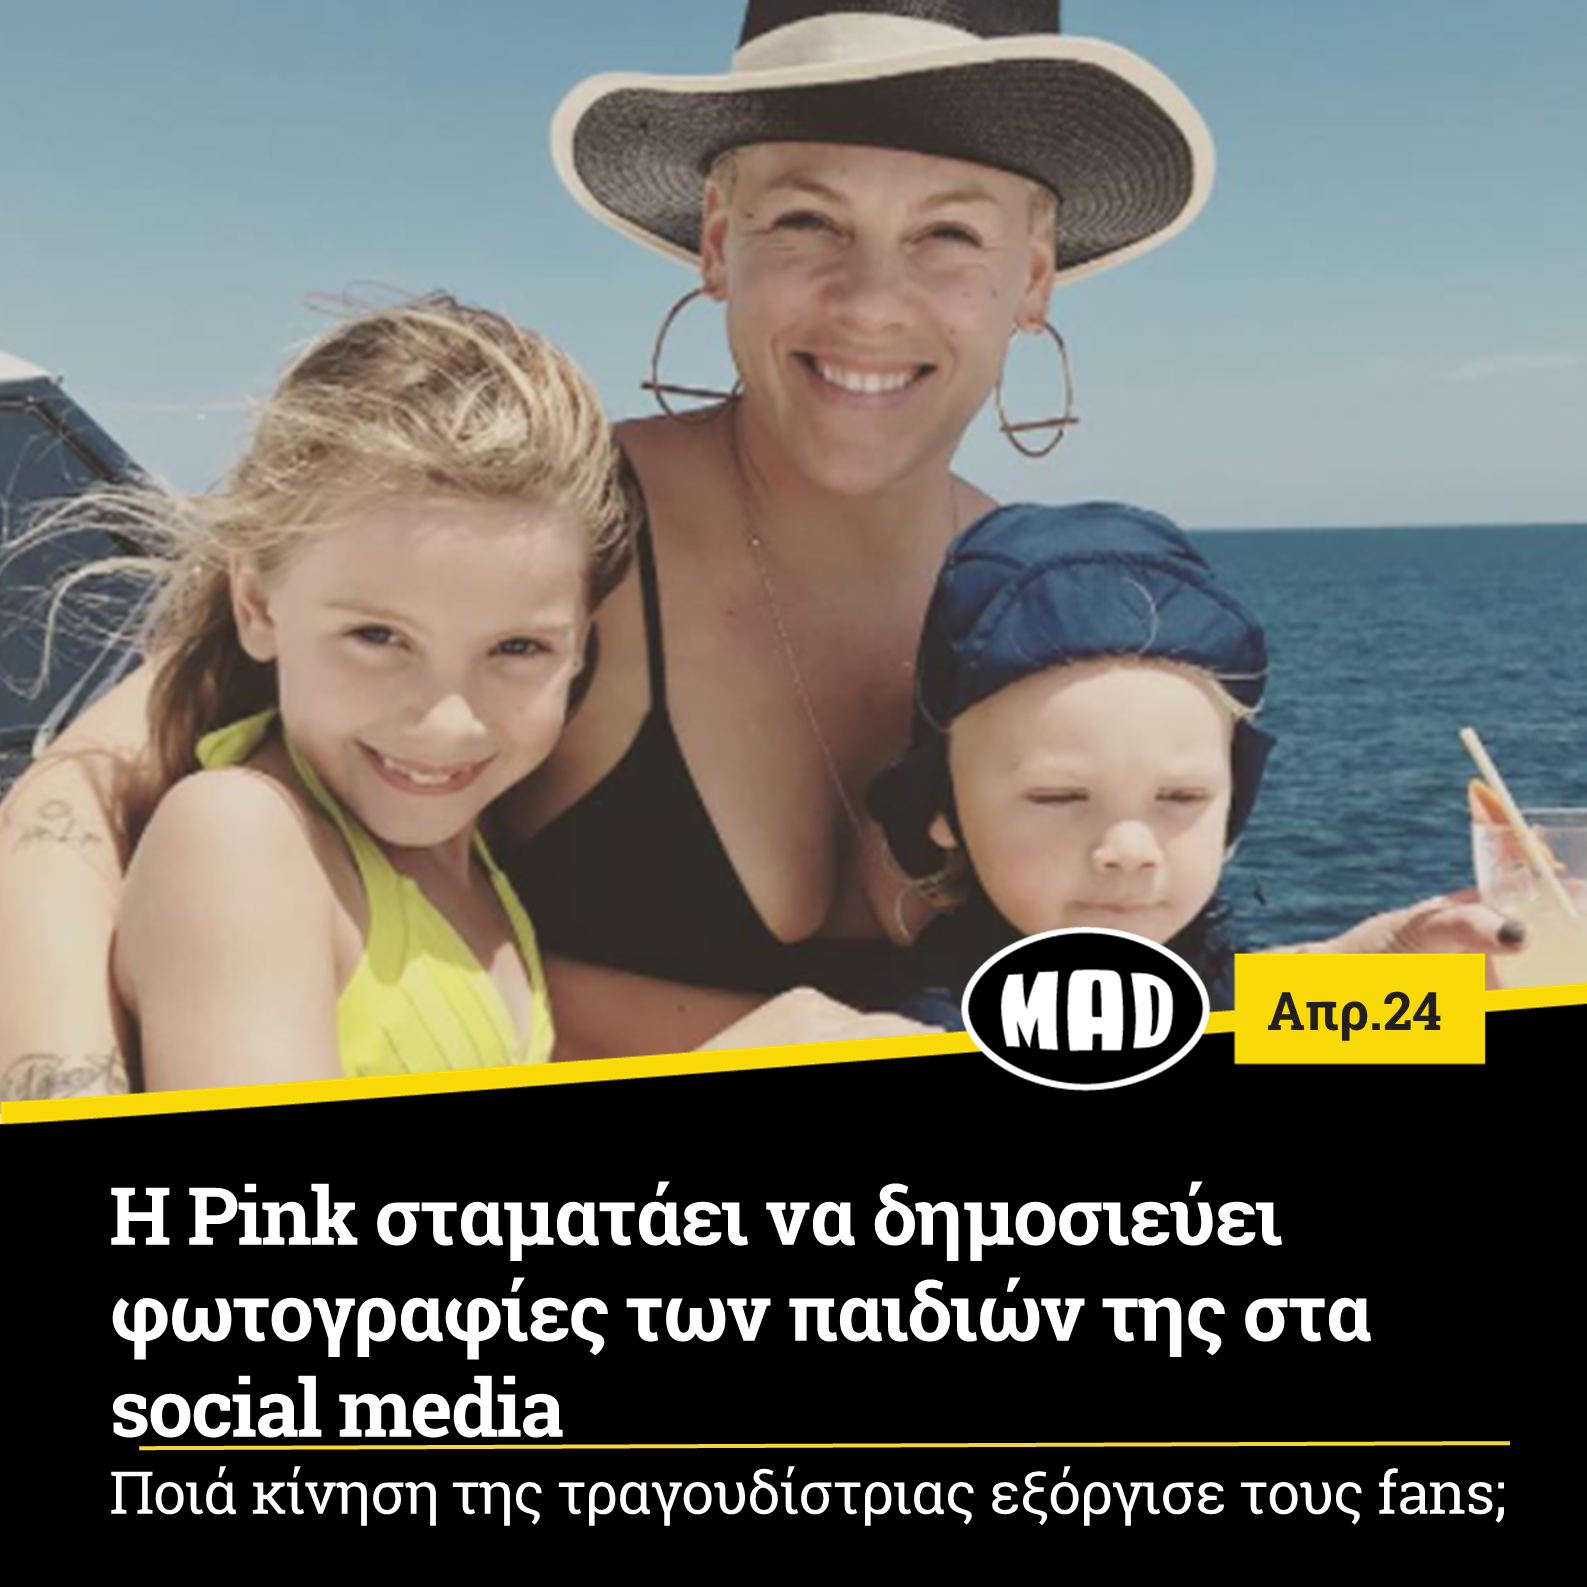 H Pink σταματάει να δημοσιεύει φωτογραφίες των παιδιών της στα social media